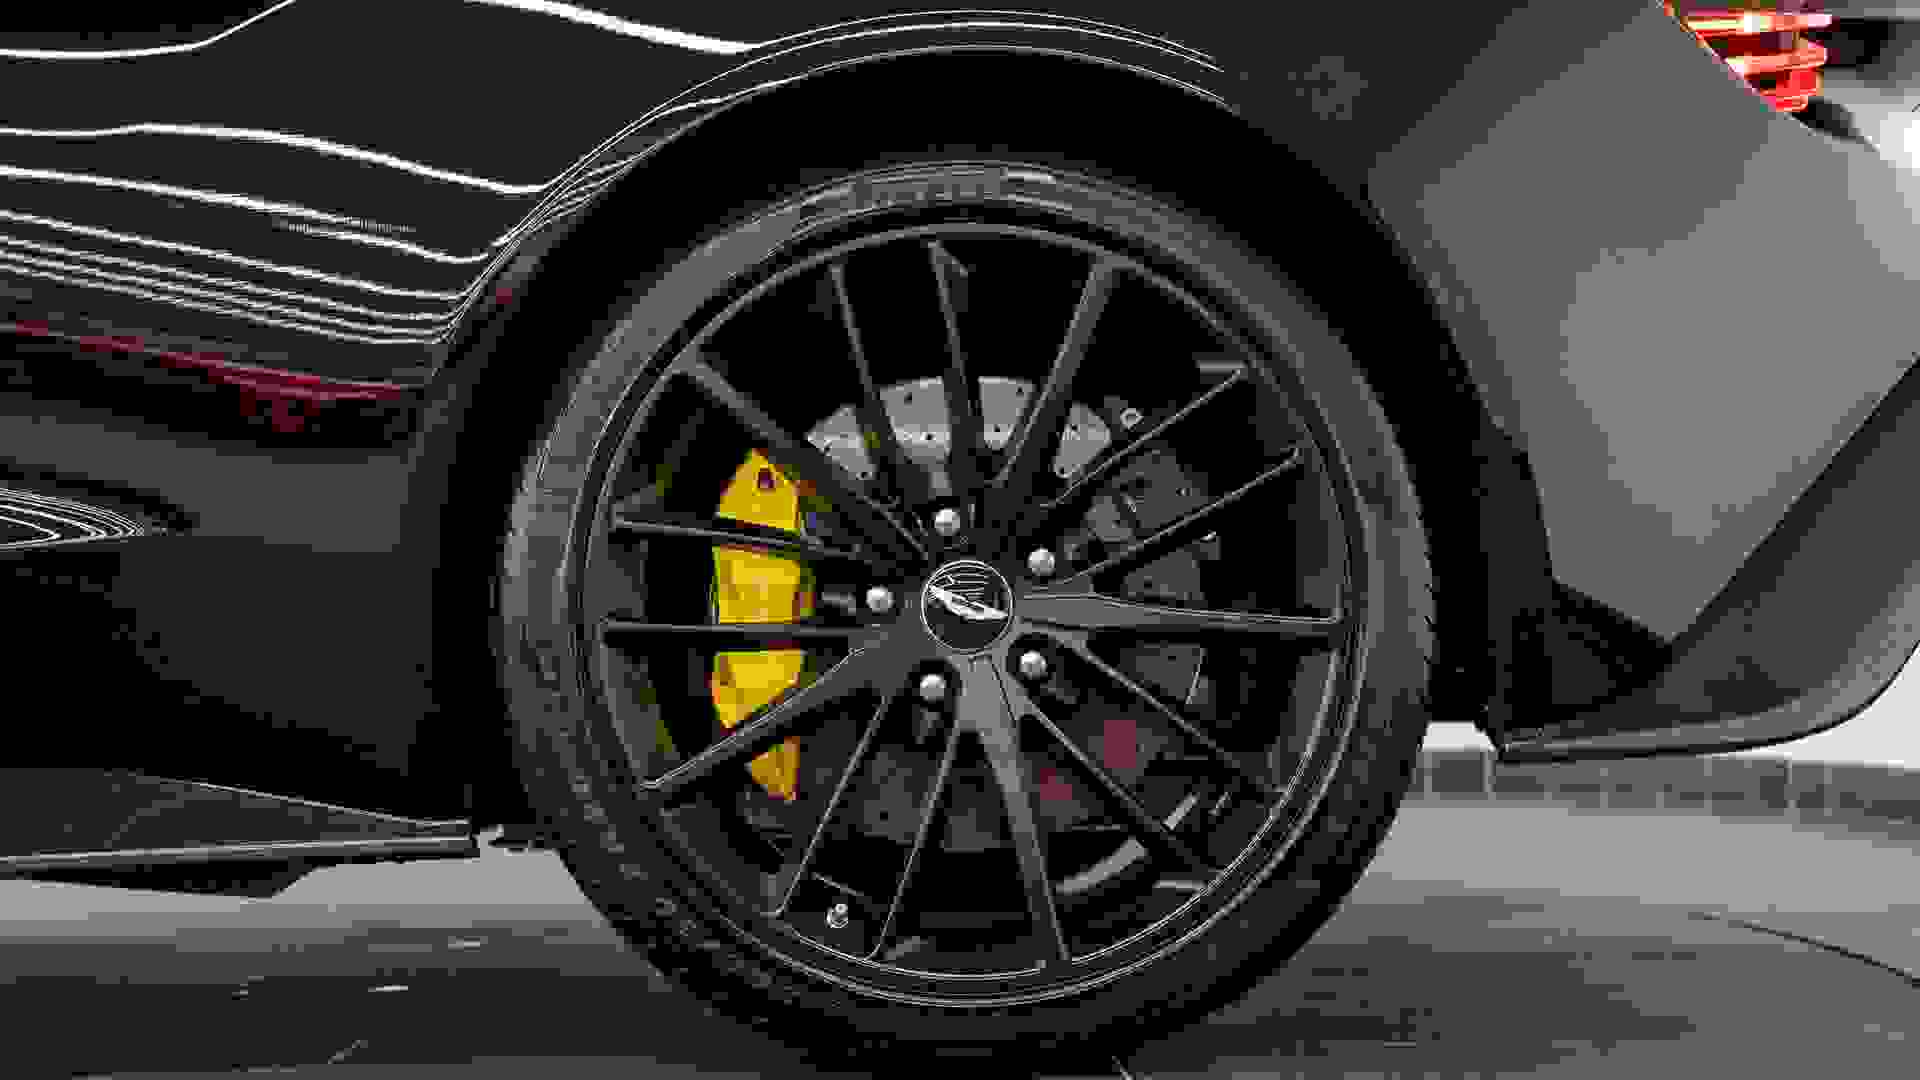 Aston Martin Vanquish Photo e607970a-66a5-4935-895b-a45310421909.jpg